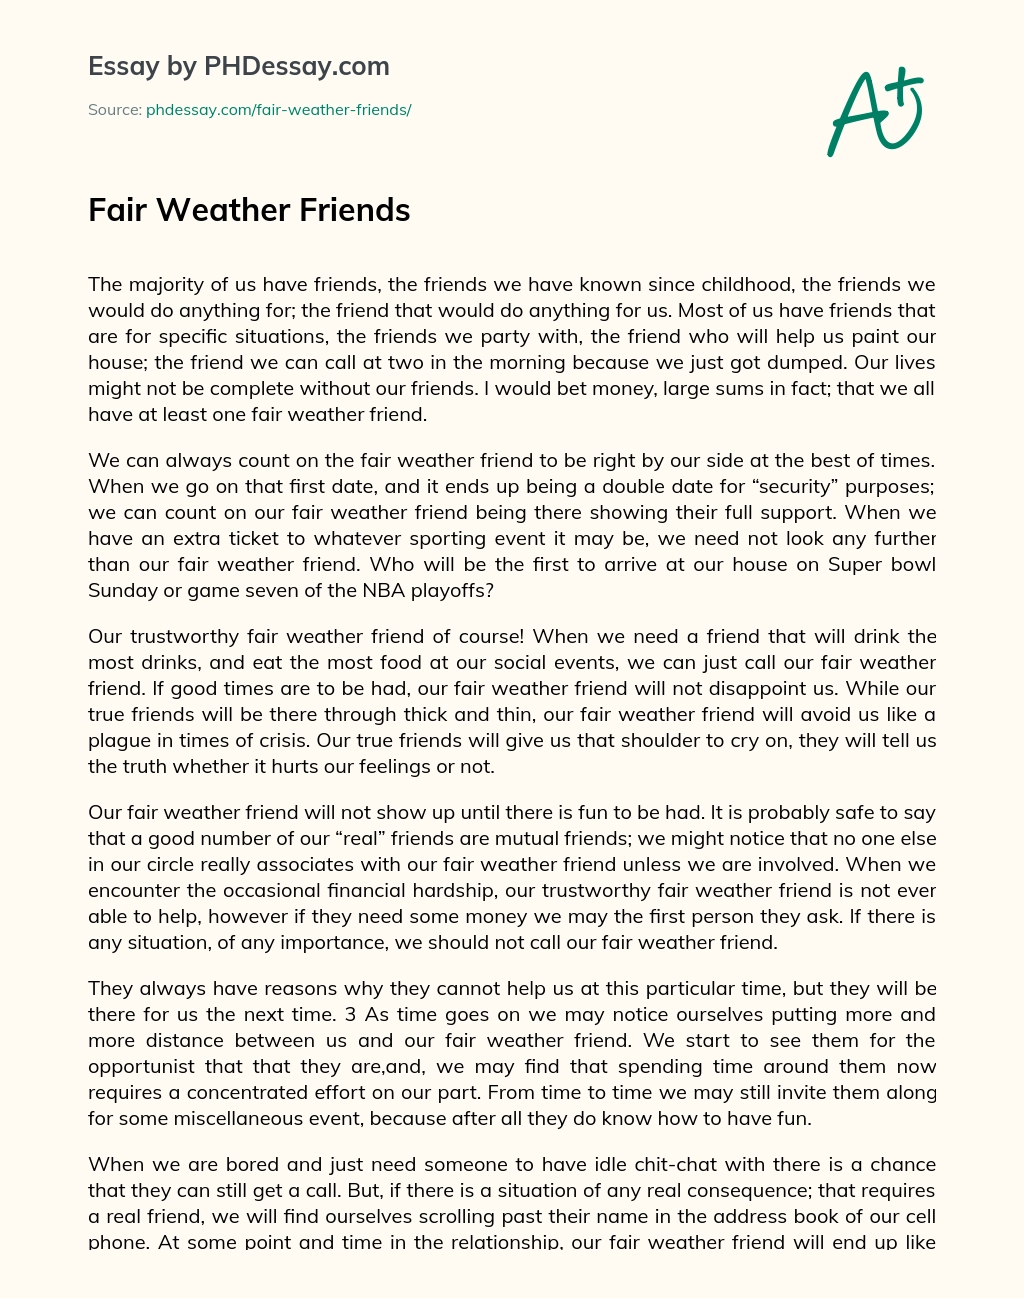 Fair Weather Friends essay